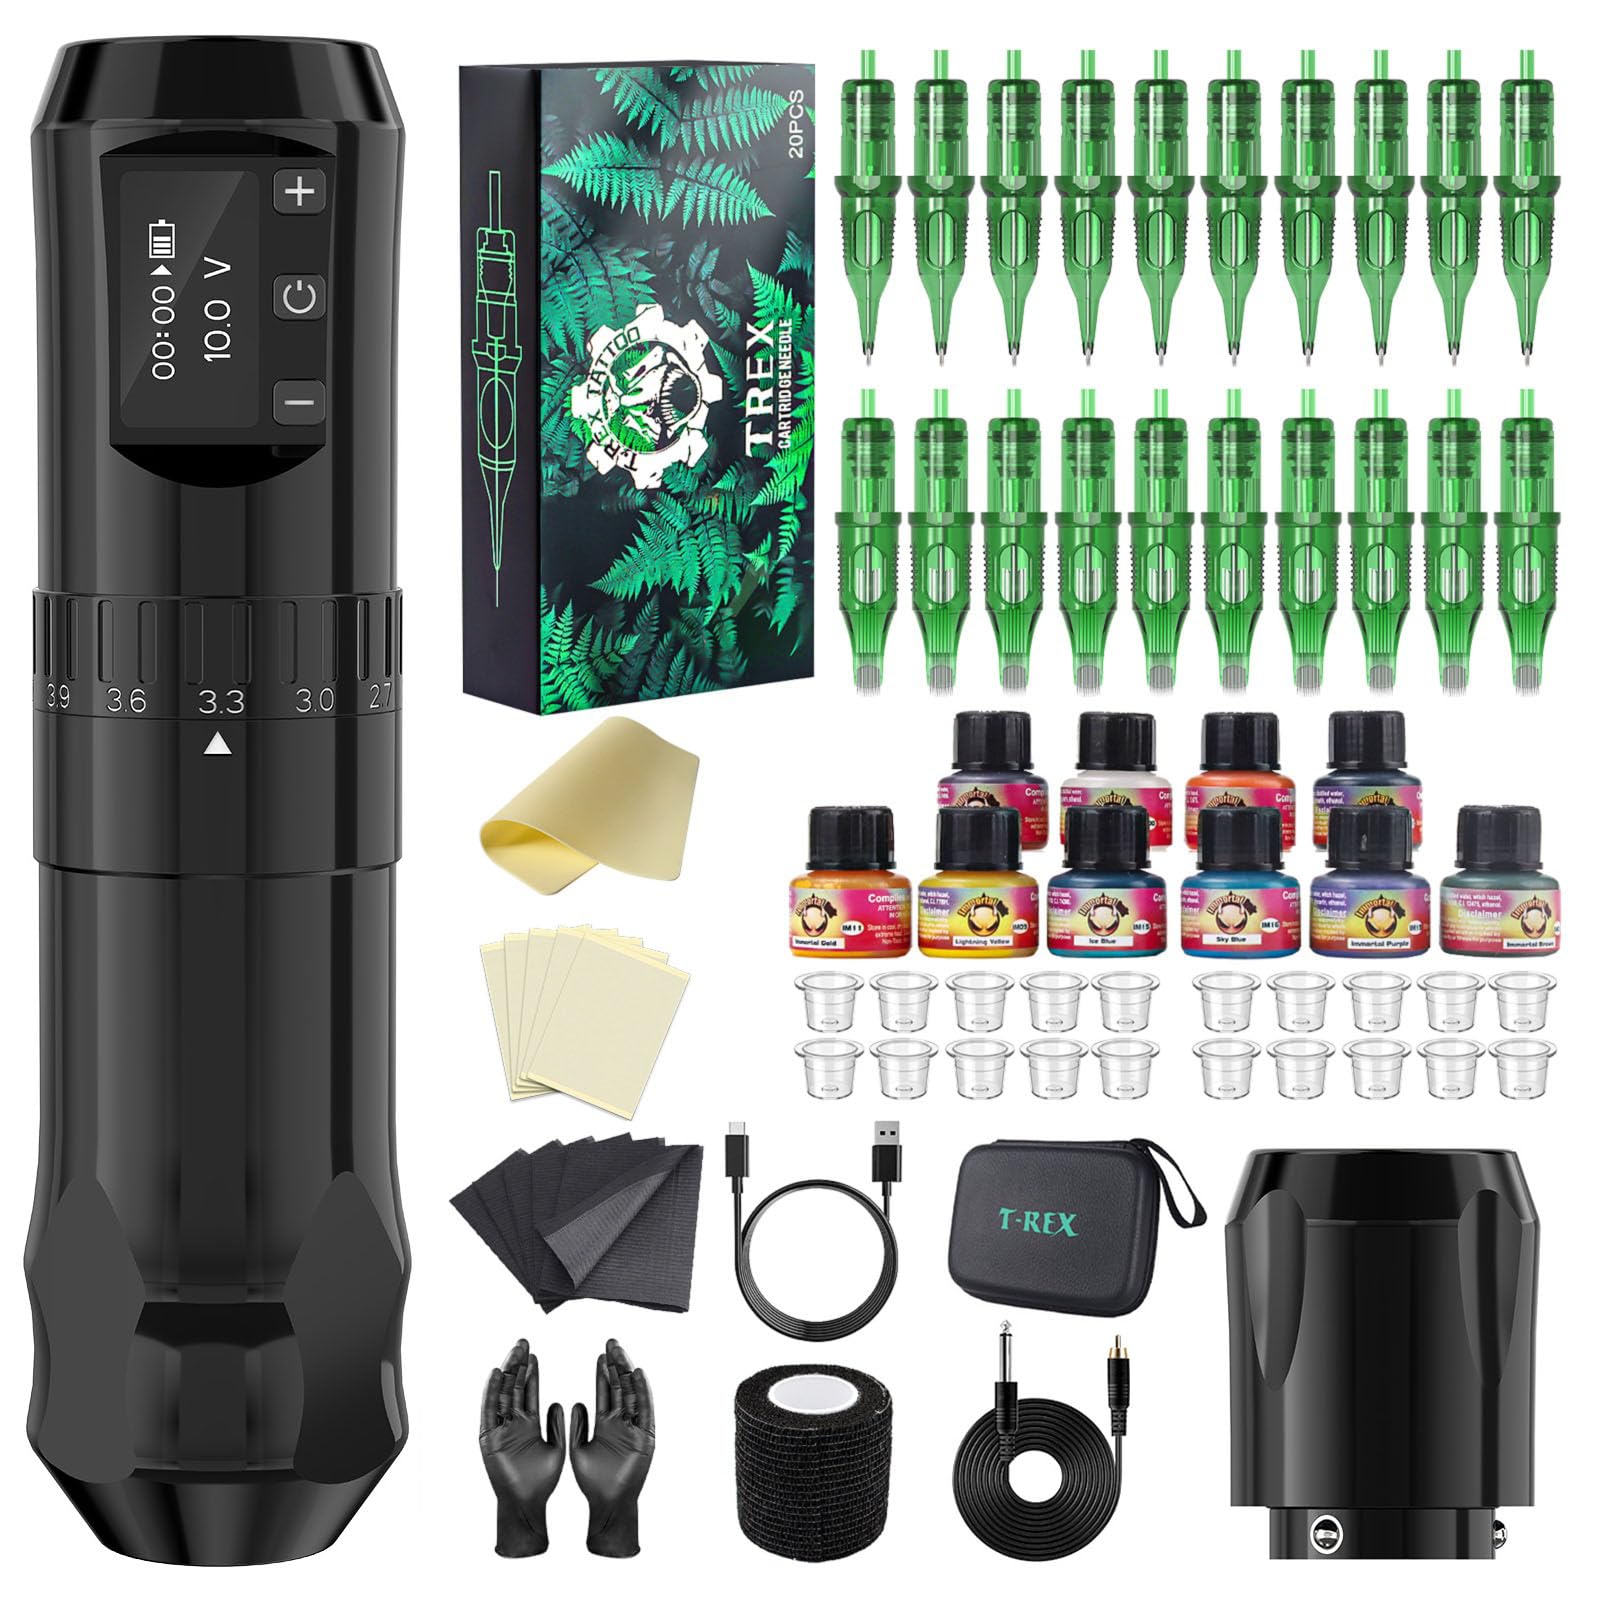 U-Rex Wireless Black Tattoo Pen Machine Kit - 7 Length Adjustable Strokes